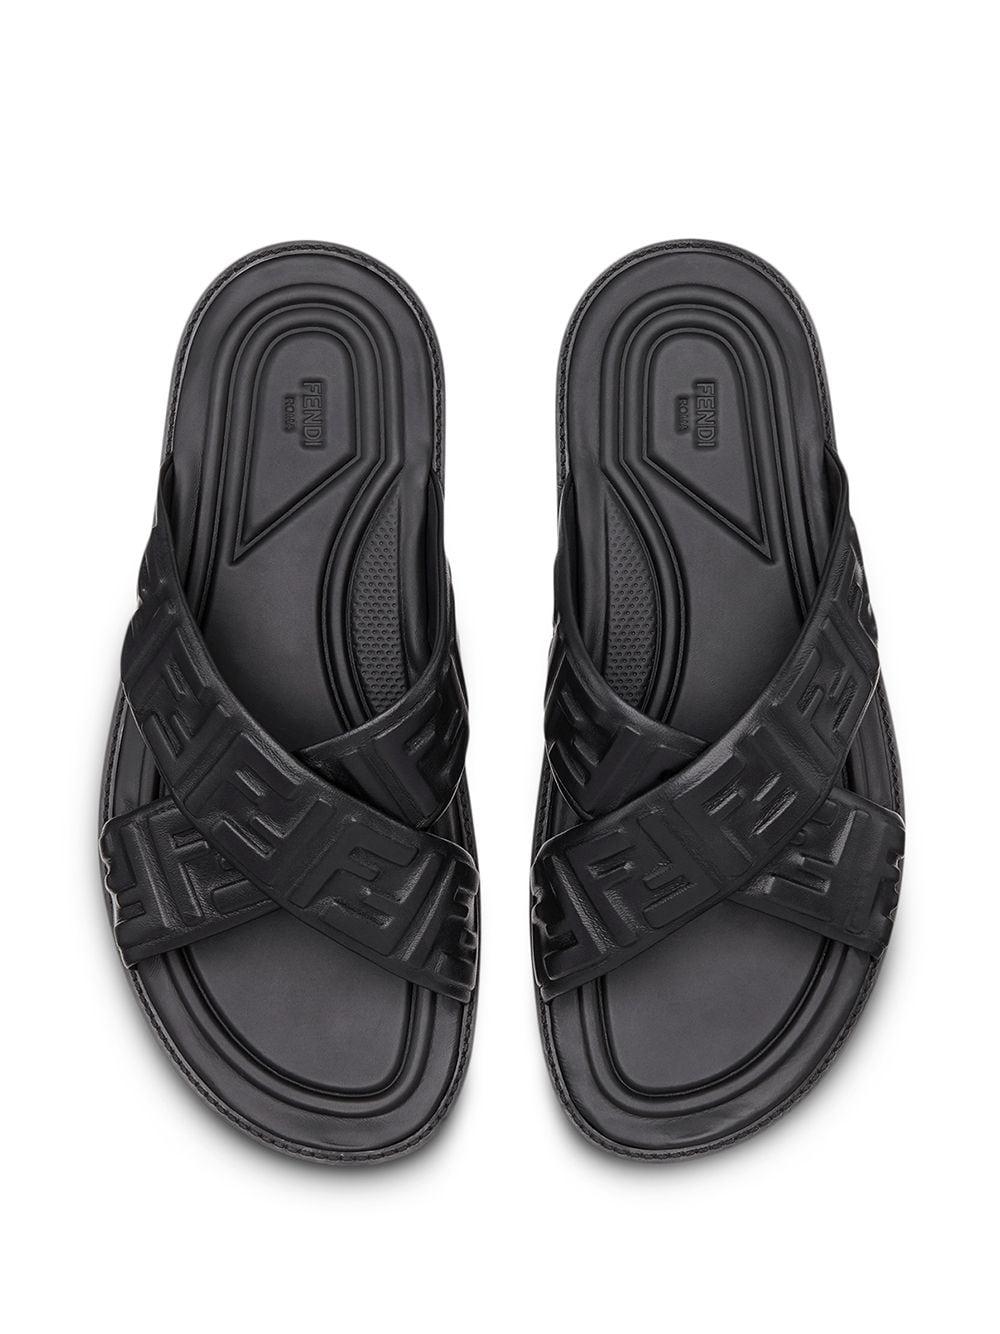 Fendi Leather Embossed Ff Motif Flat Sandals in Black for Men 